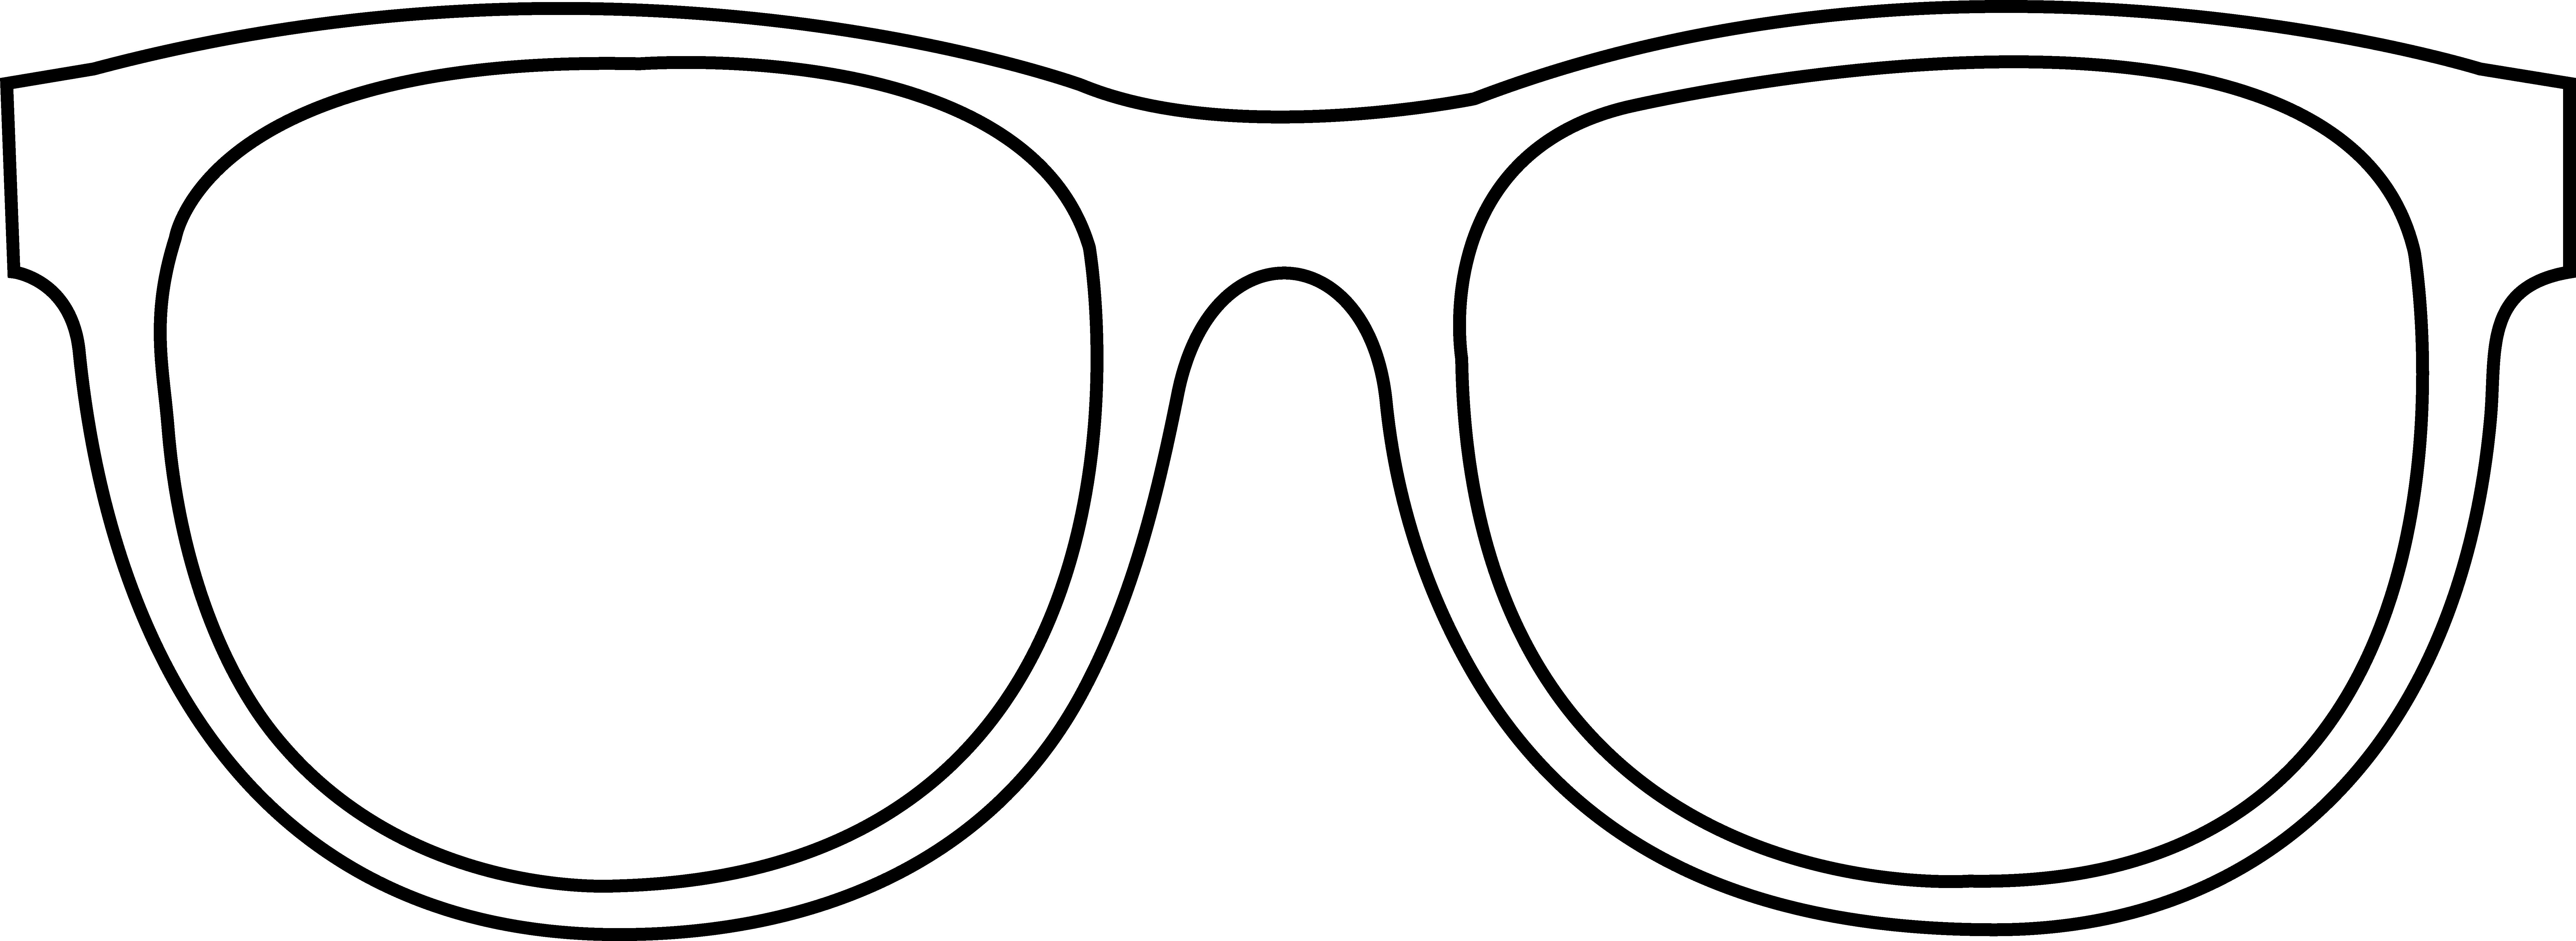 Sunglasses Outline Clip Art Sketch Coloring Page